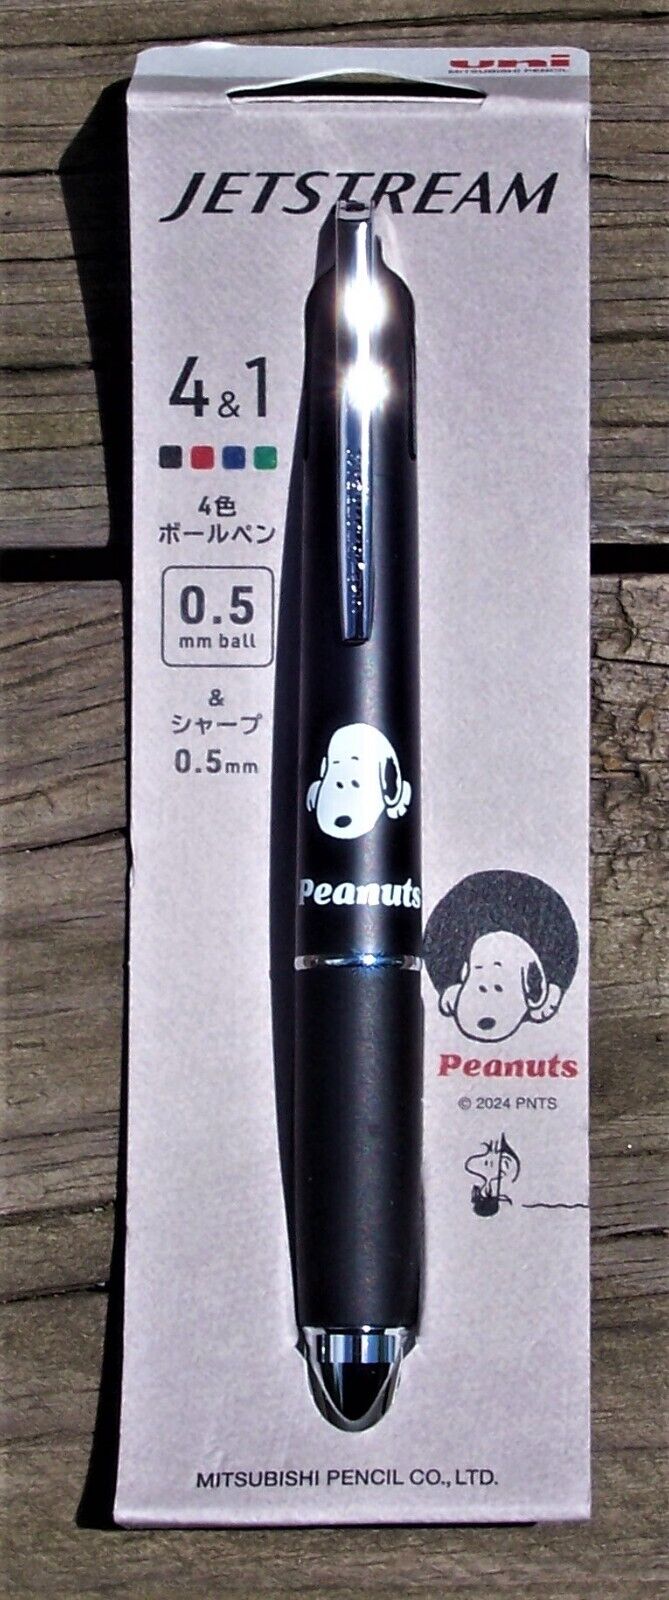 UNI Pencil Limited Jet Stream Multifunctional Pen 4 & 1 Peanut Design Black